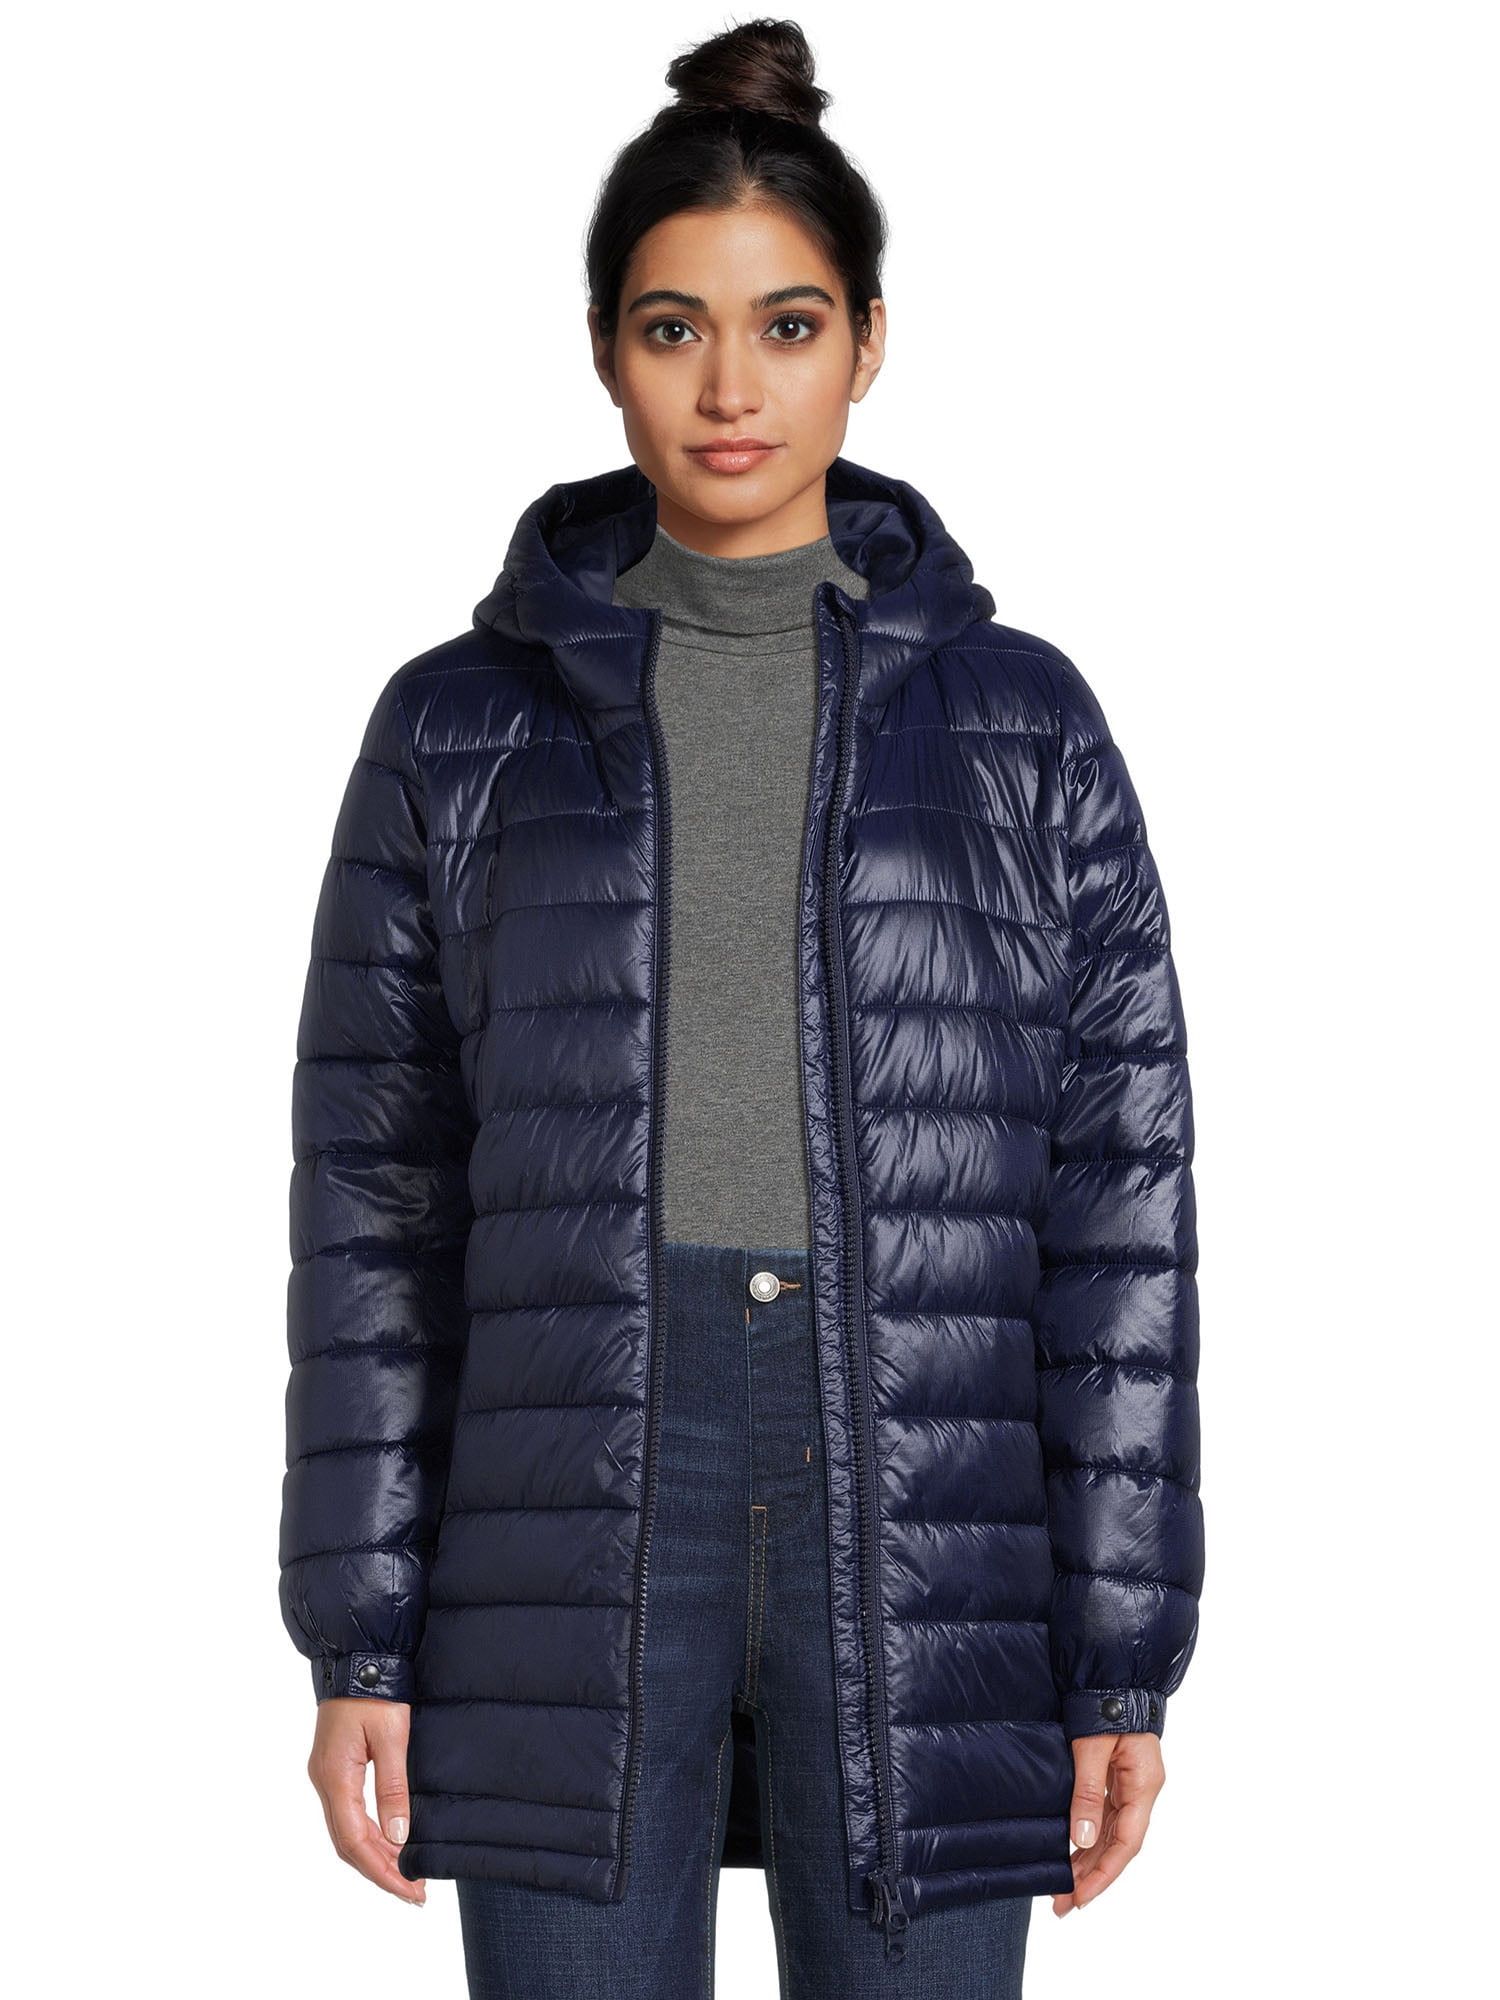 Swiss Tech Women's Hooded Mid Length Puffer Jacket, Sizes XS-3X ...